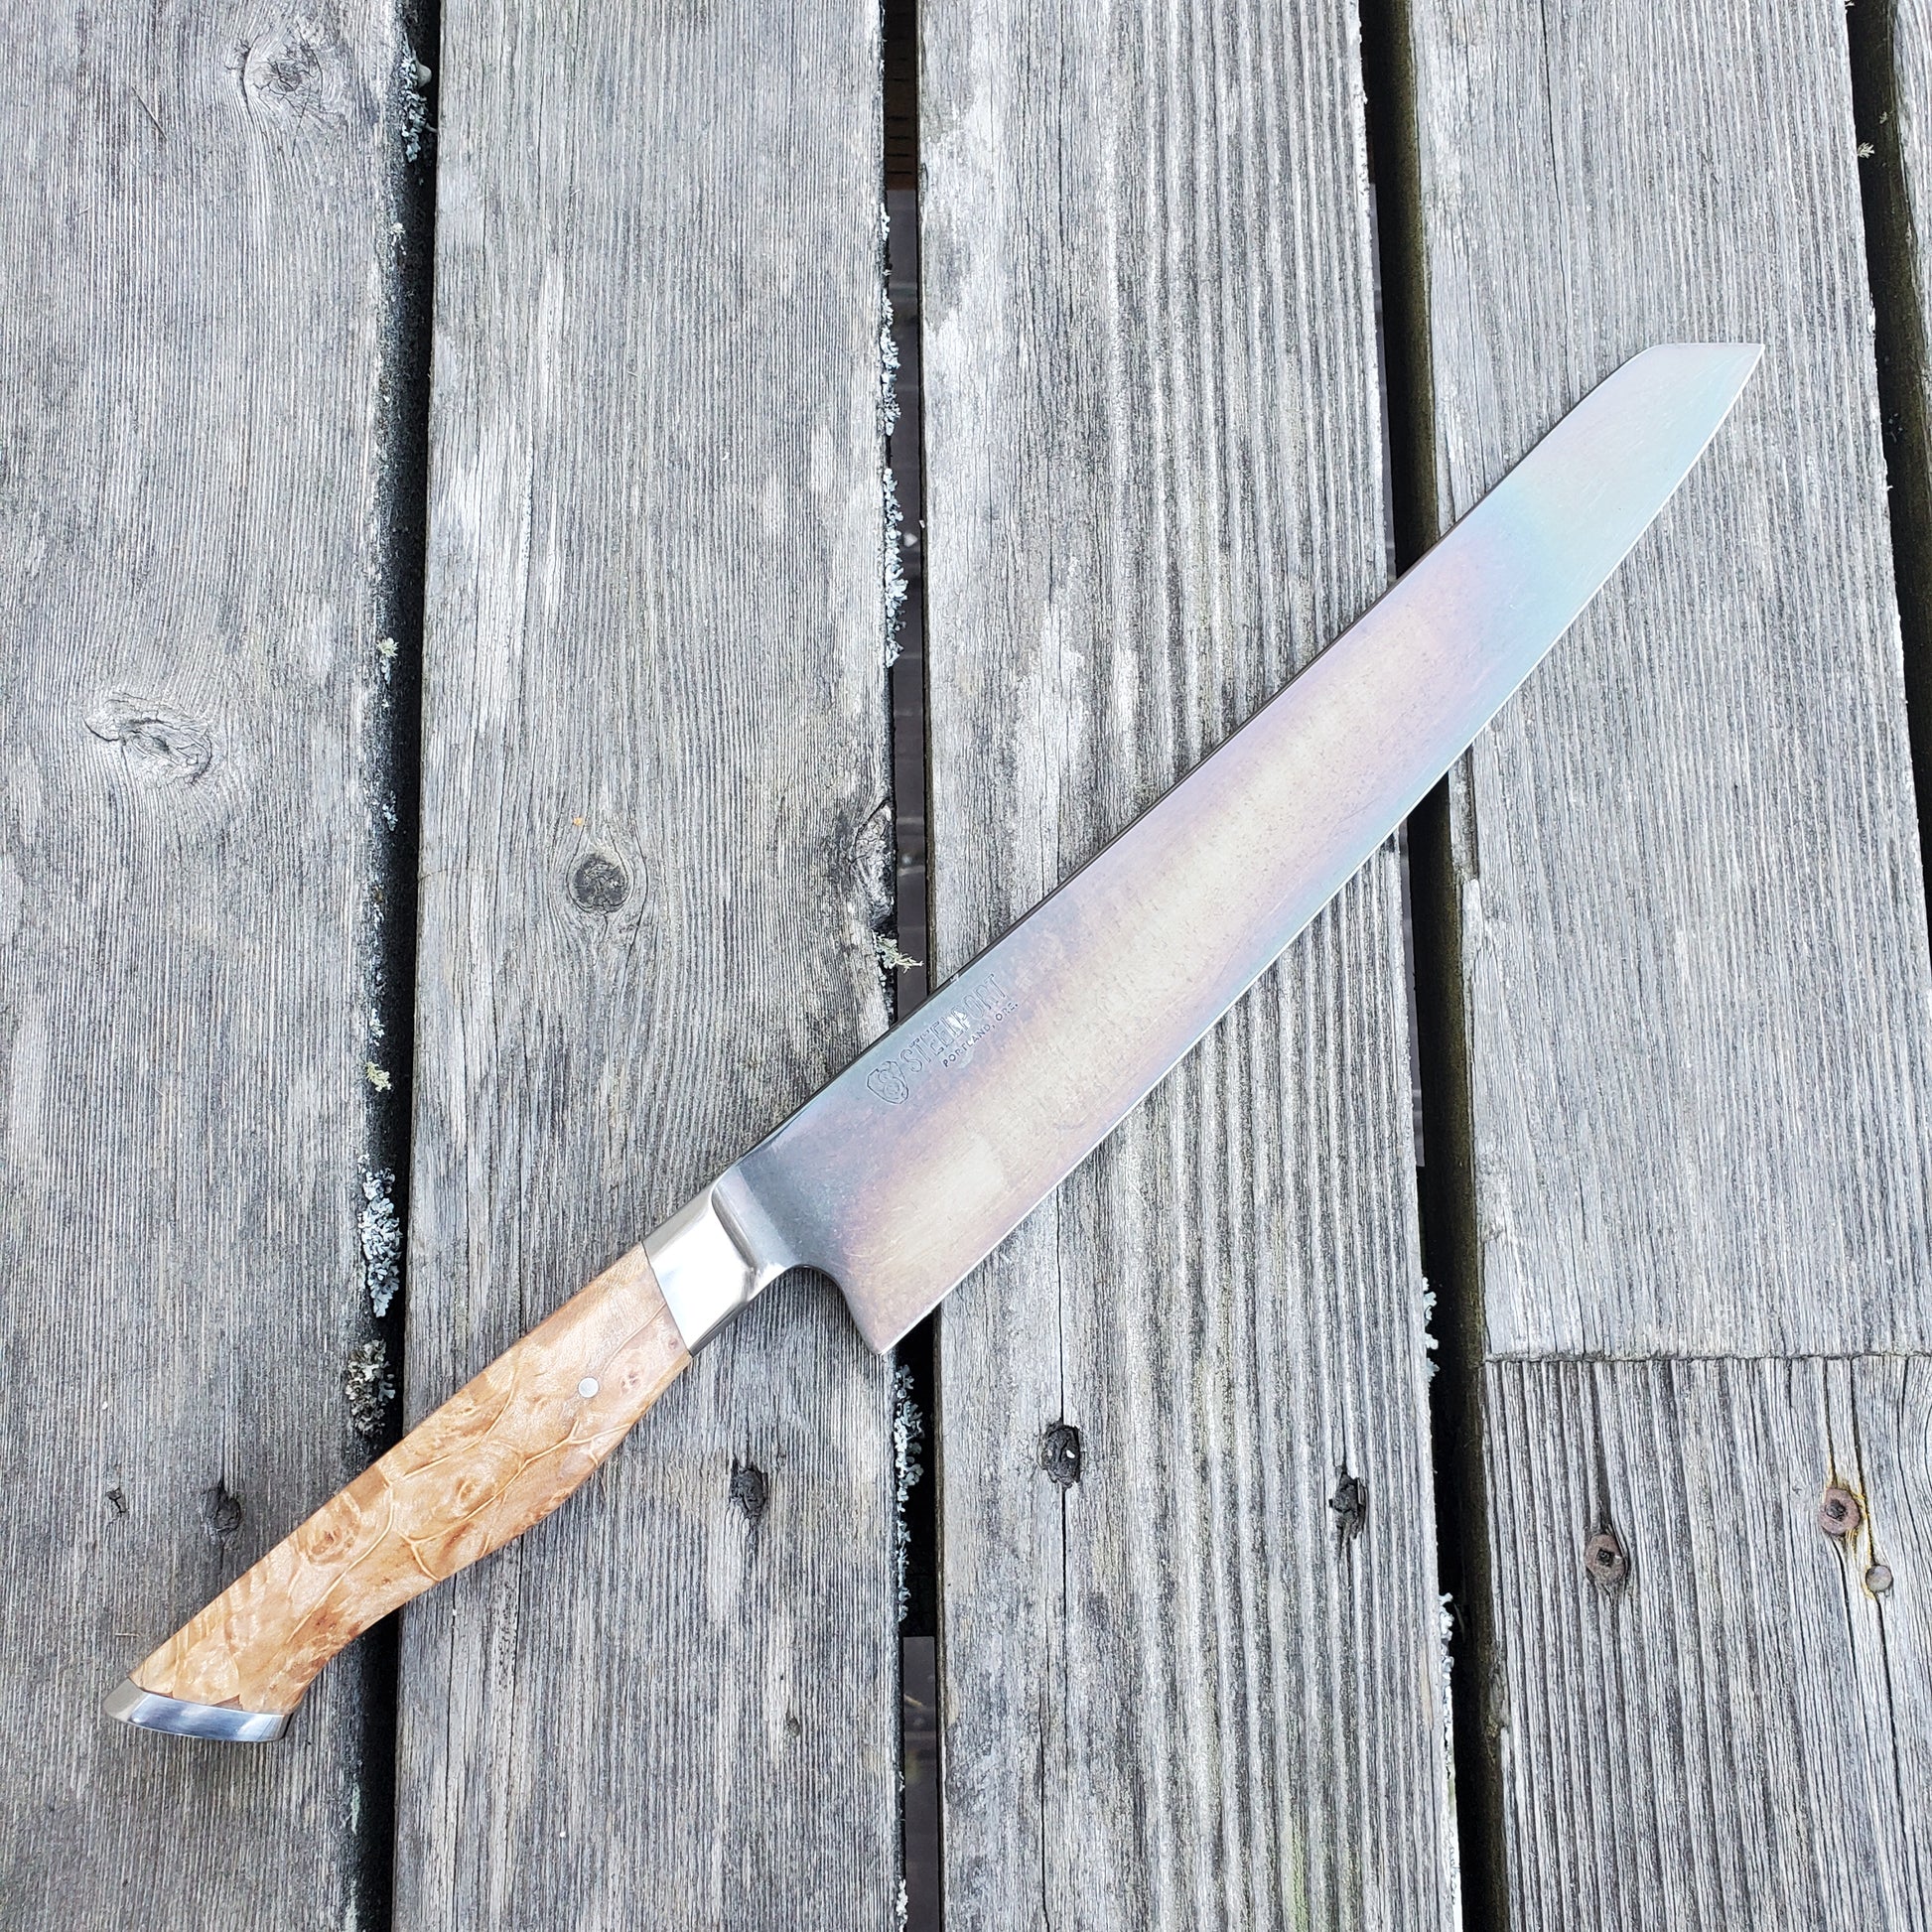 Steelport Carbon Steel Knife Set with Sheaths - 3 Piece